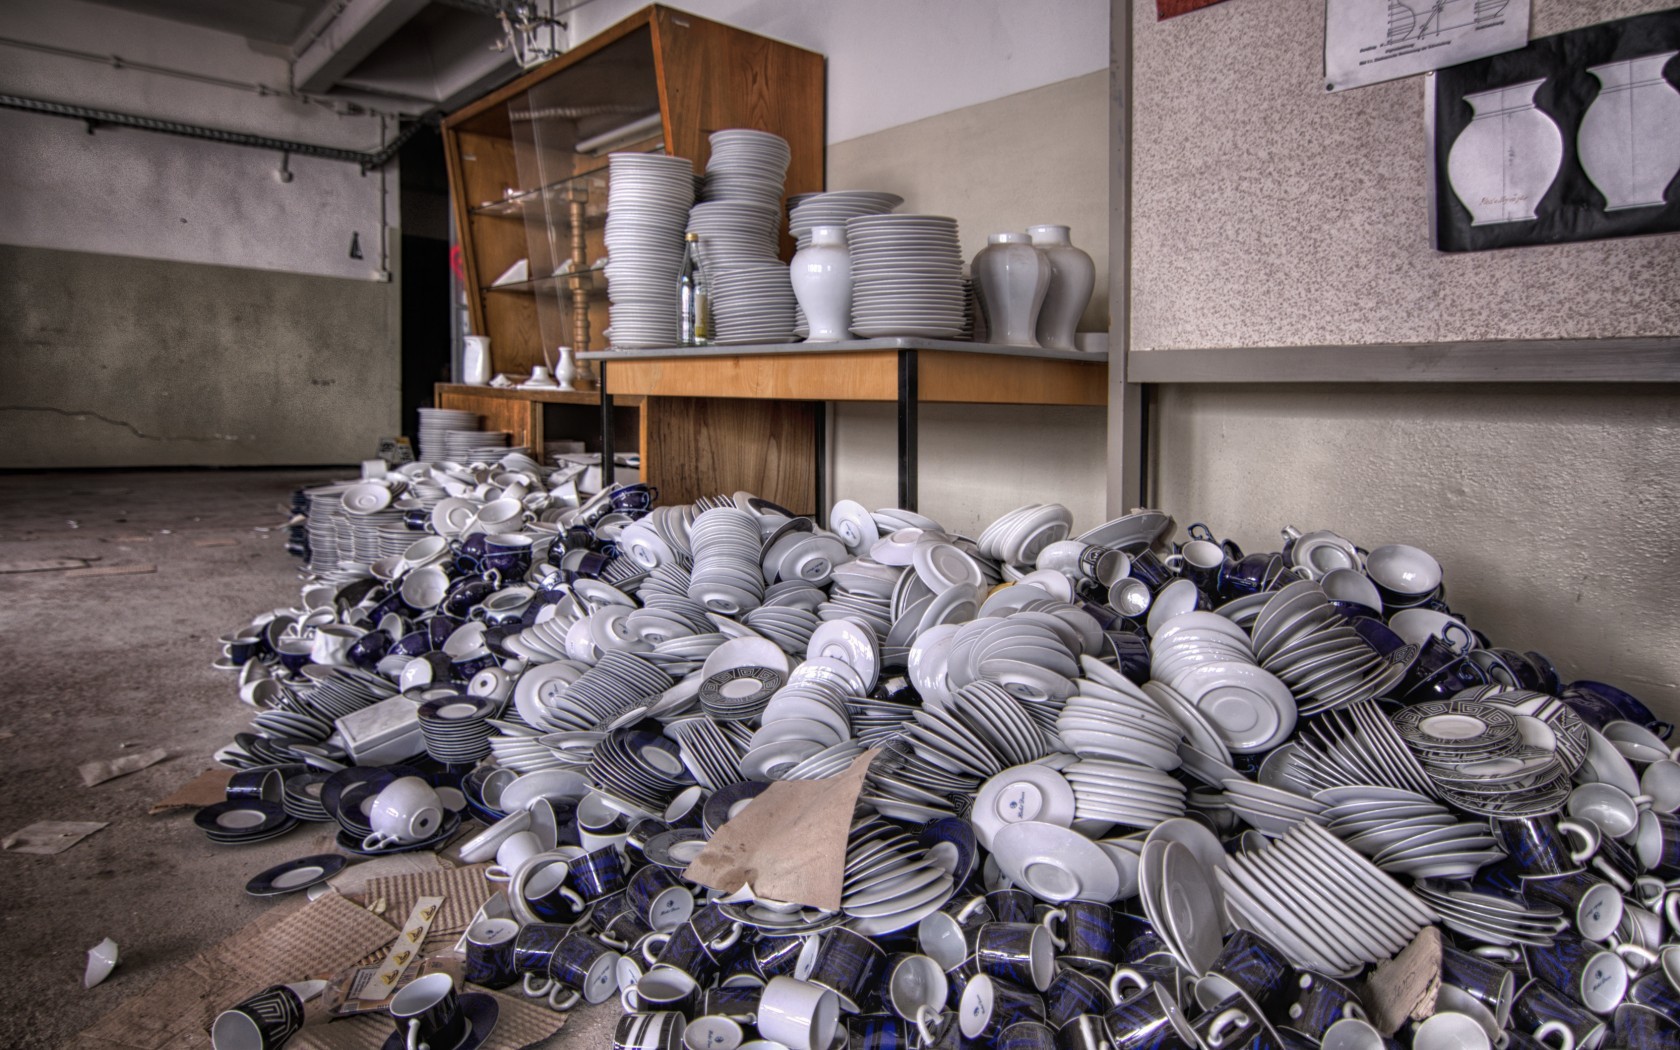 General 1680x1050 interior room plates mug cutlery vases workshops